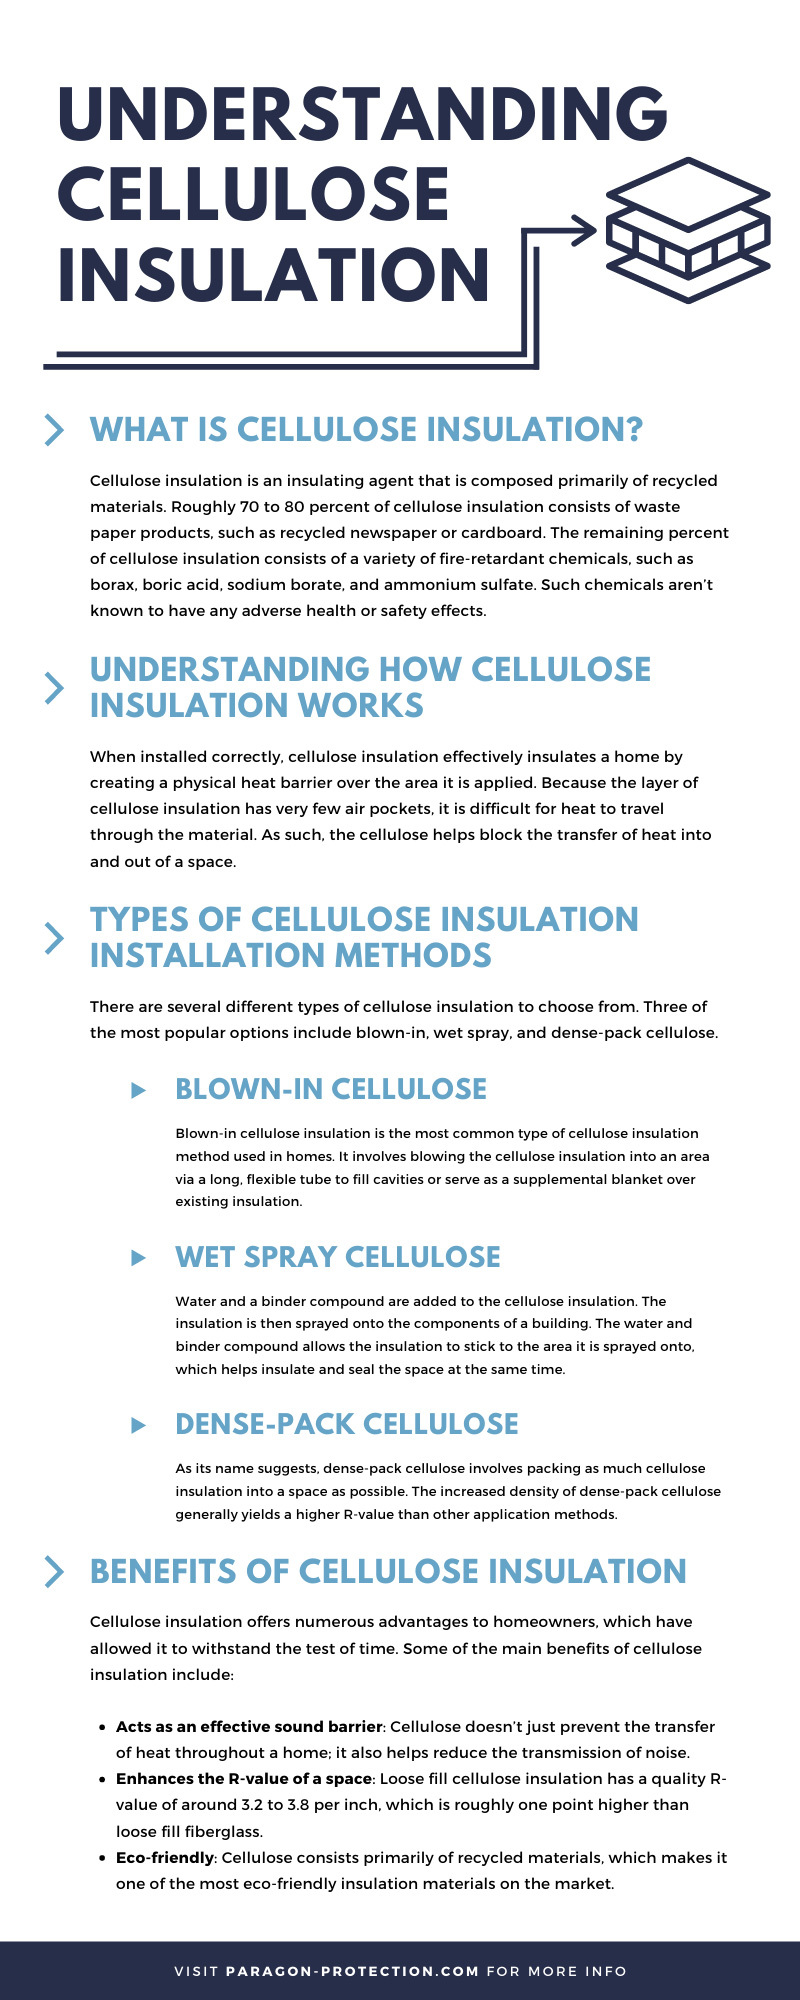 Understanding Cellulose Insulation infographic